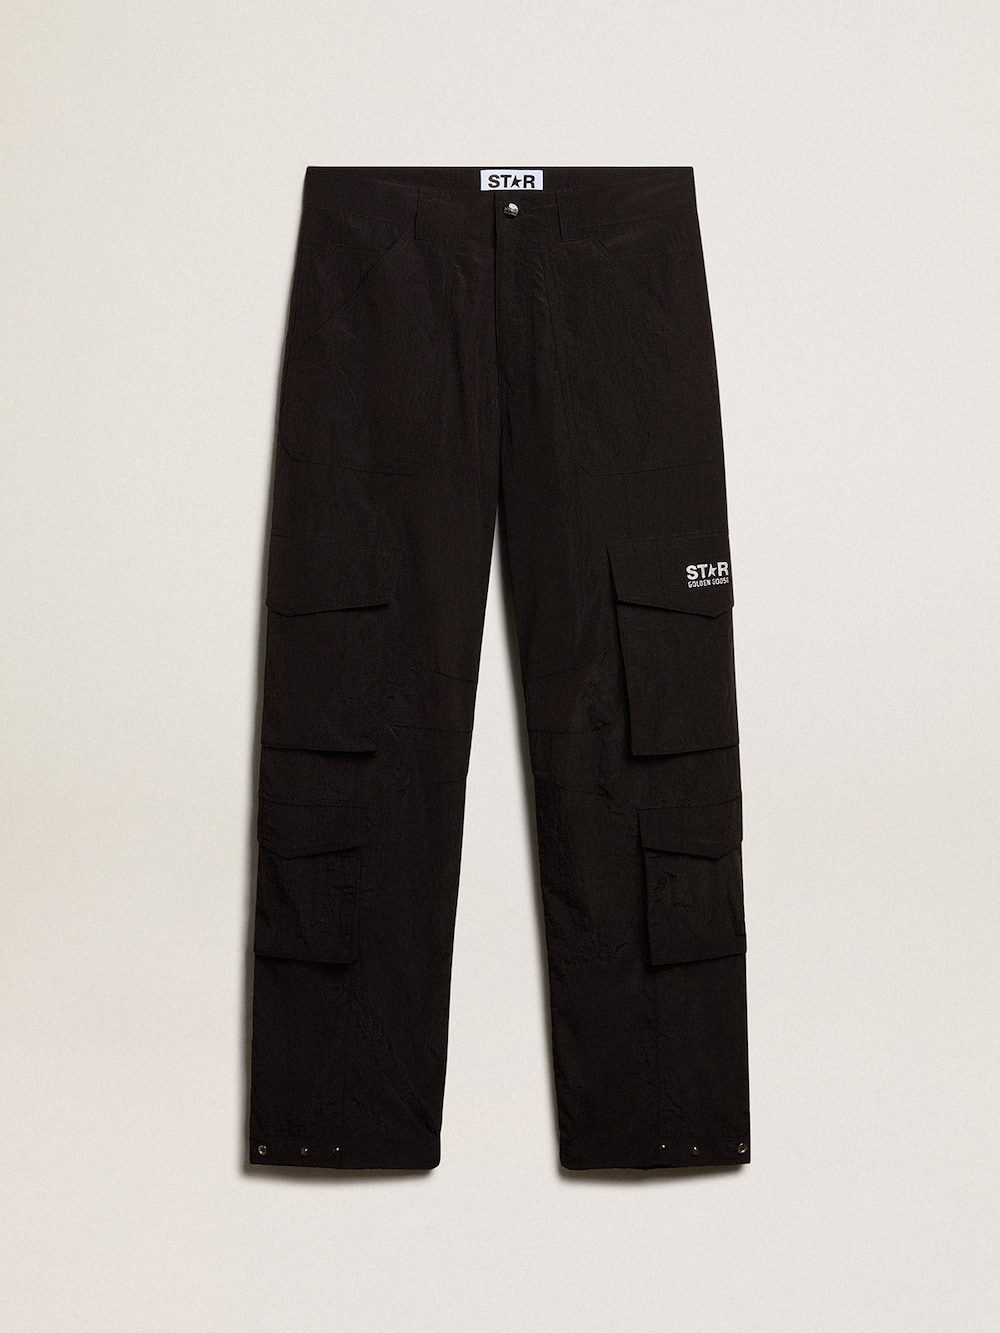 Golden Goose - Black-colored ripstop nylon cargo pants in 